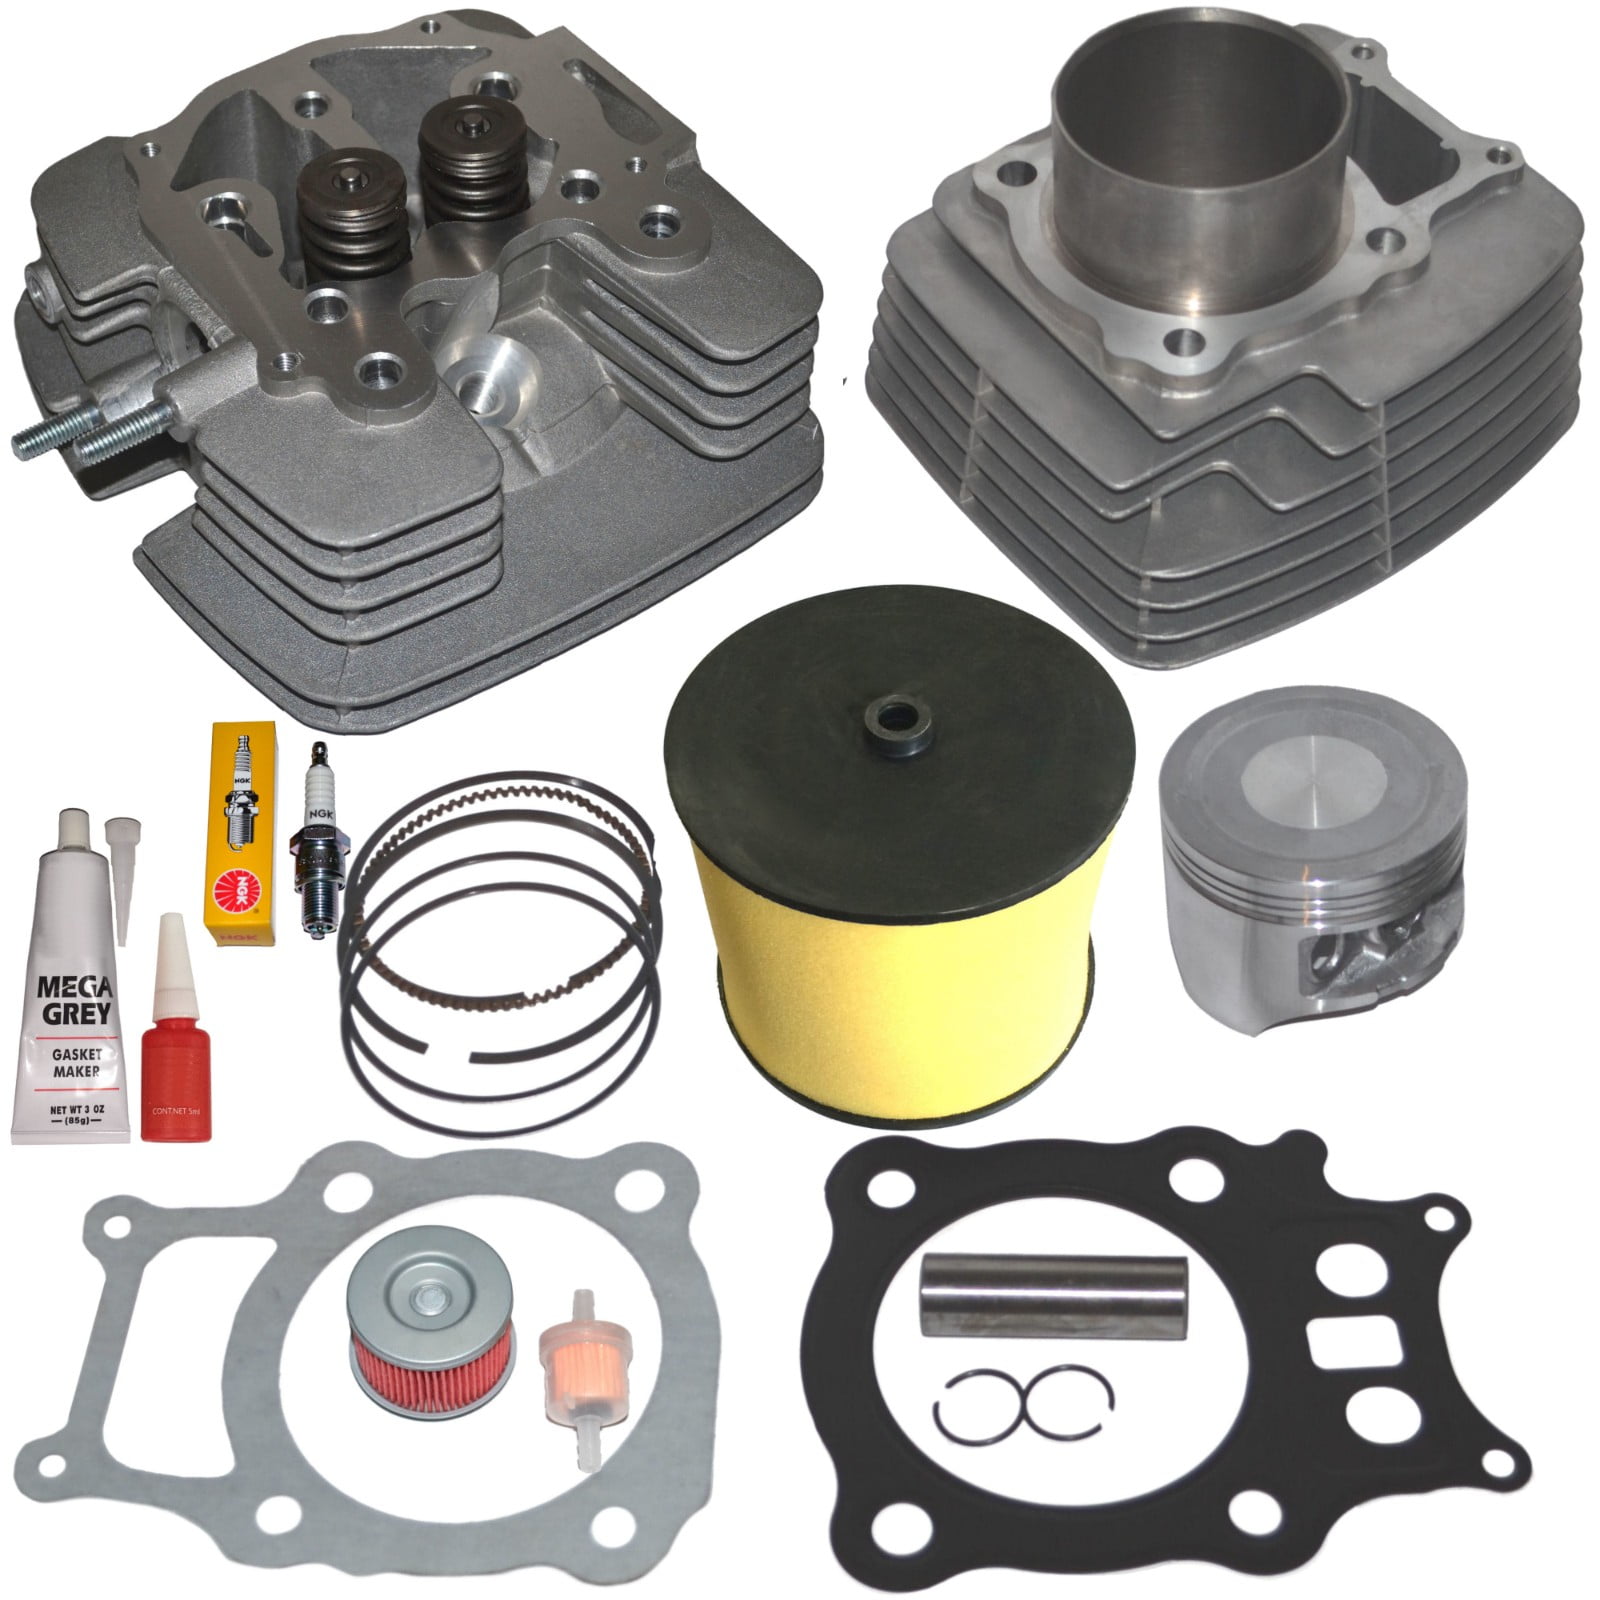 New Piston Rings Gasket Kit Spark Plug For 2000-06 Honda Rancher TRX350 TRX 350